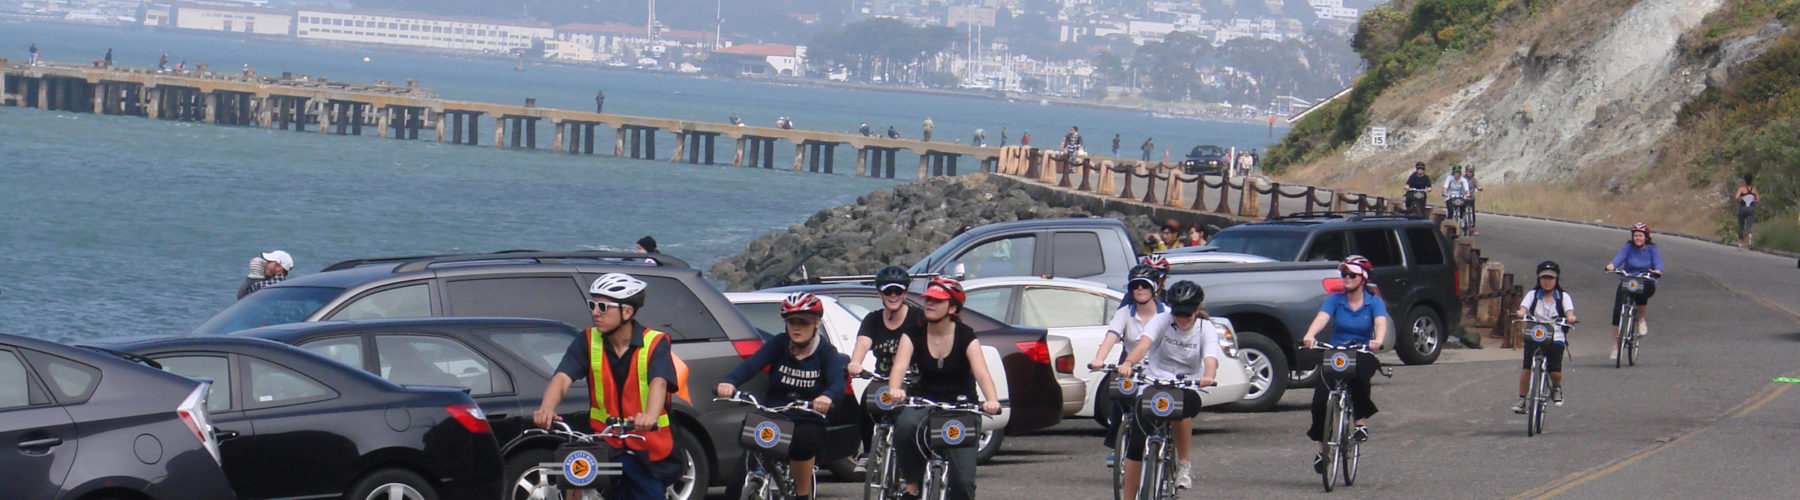 guided san francisco bike tours